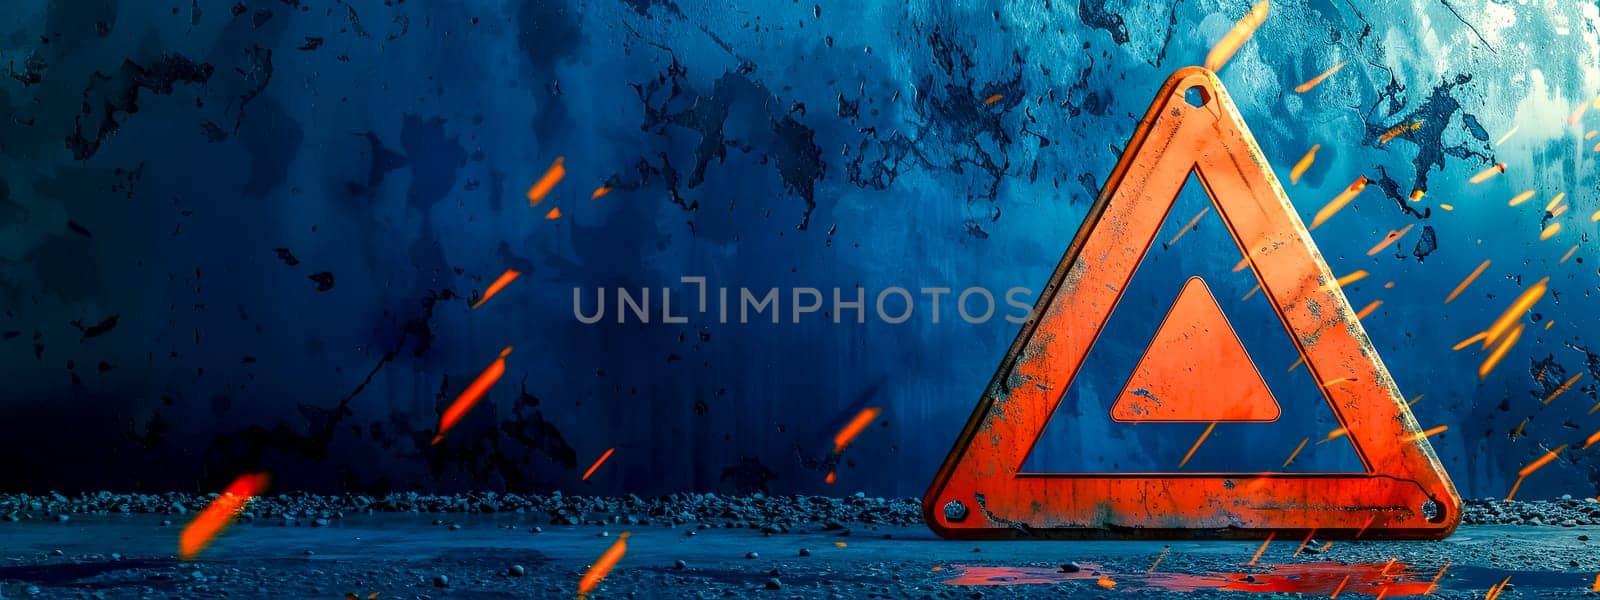 Hazard Warning Triangle on Blue and Orange Dynamic Background, copy space